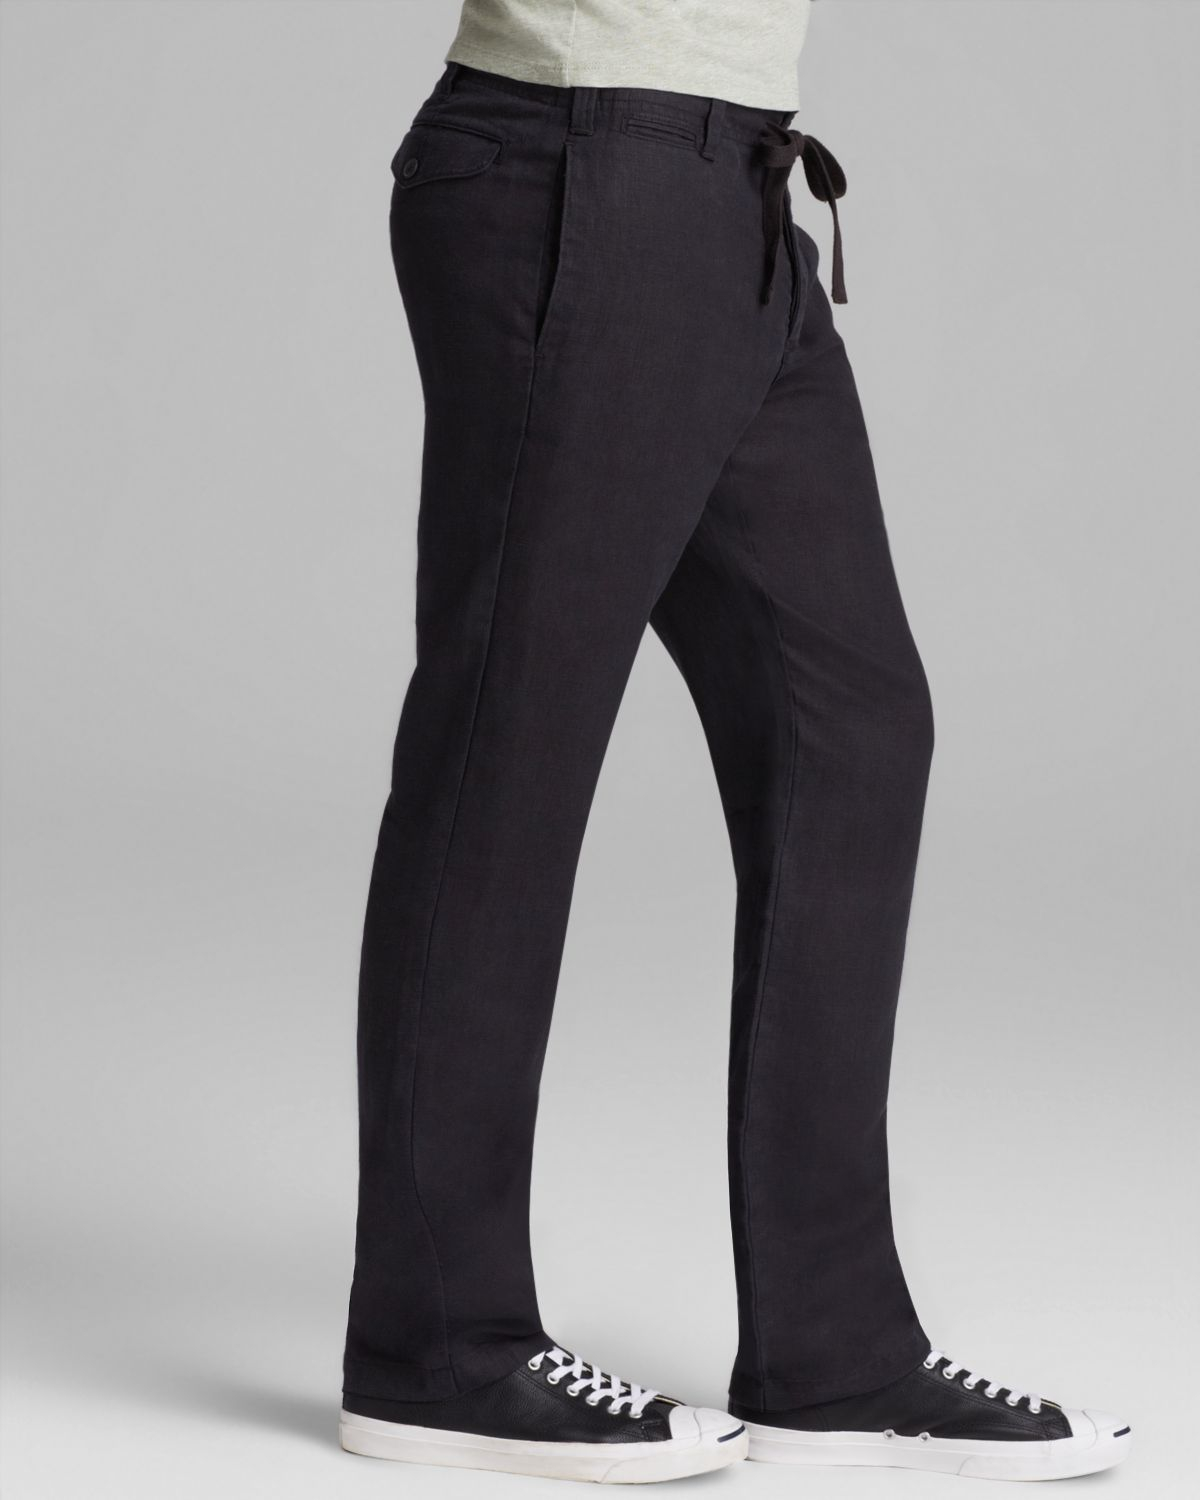 Vince Linen Drawstring Pants in Black for Men - Lyst